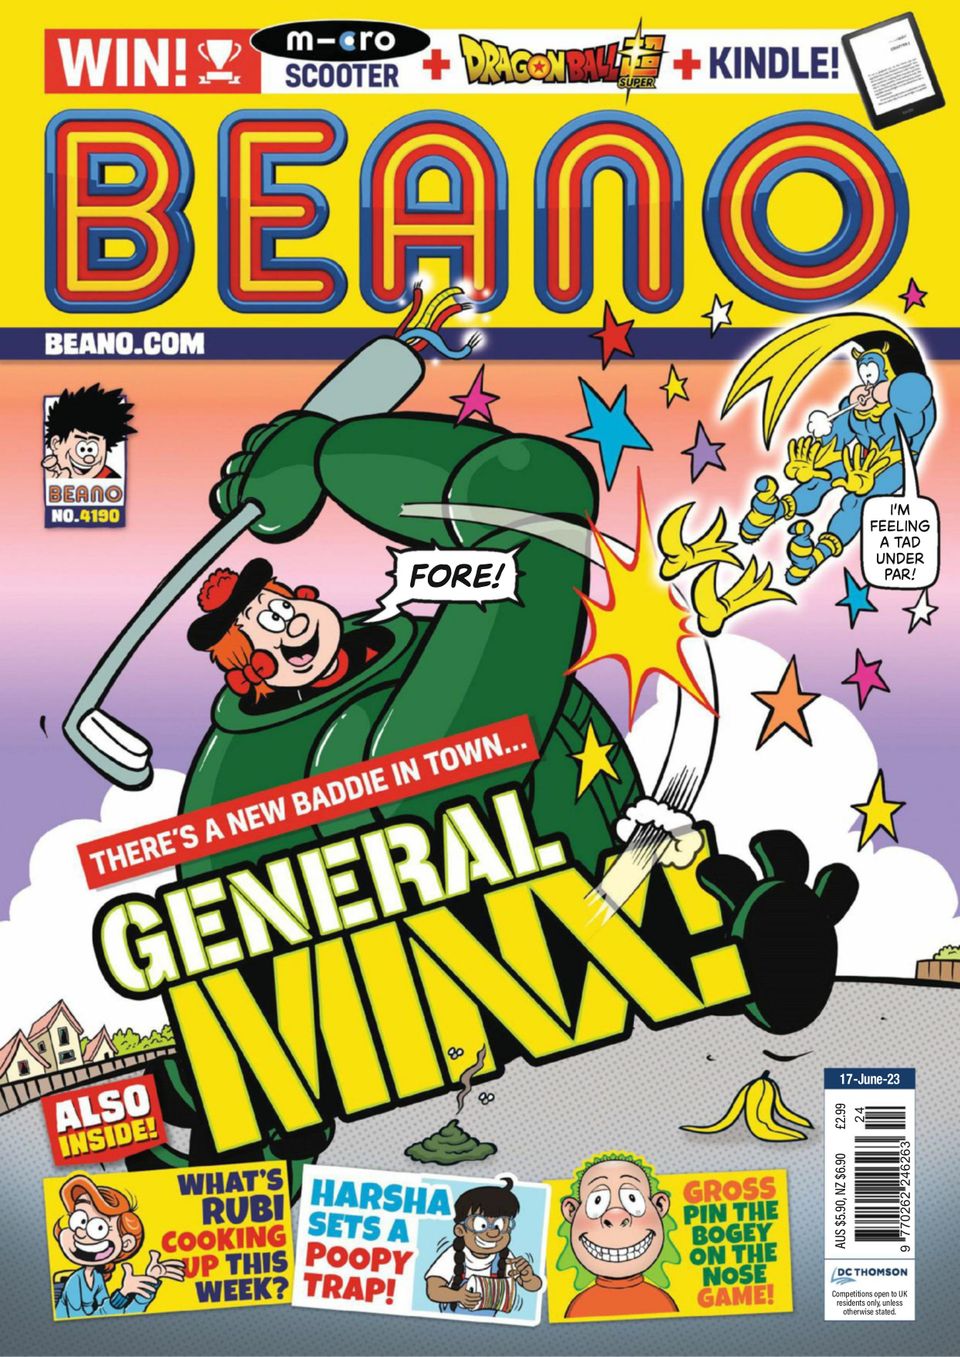 The Beano June 17, 2023 (Digital)